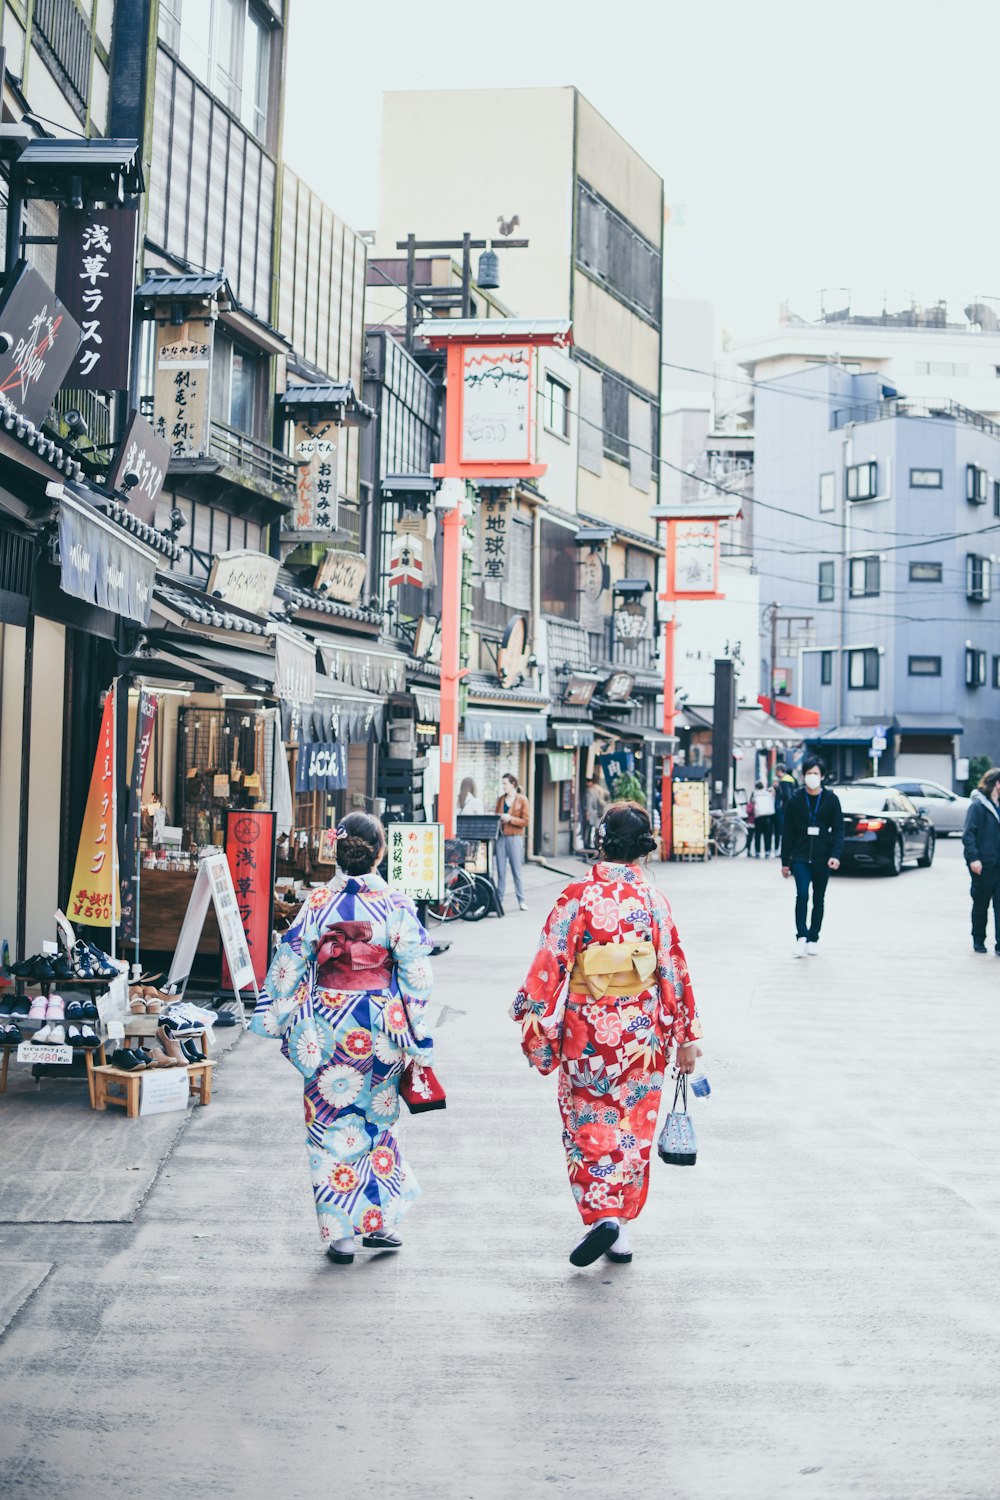 two women wearing traditional Japanese dress